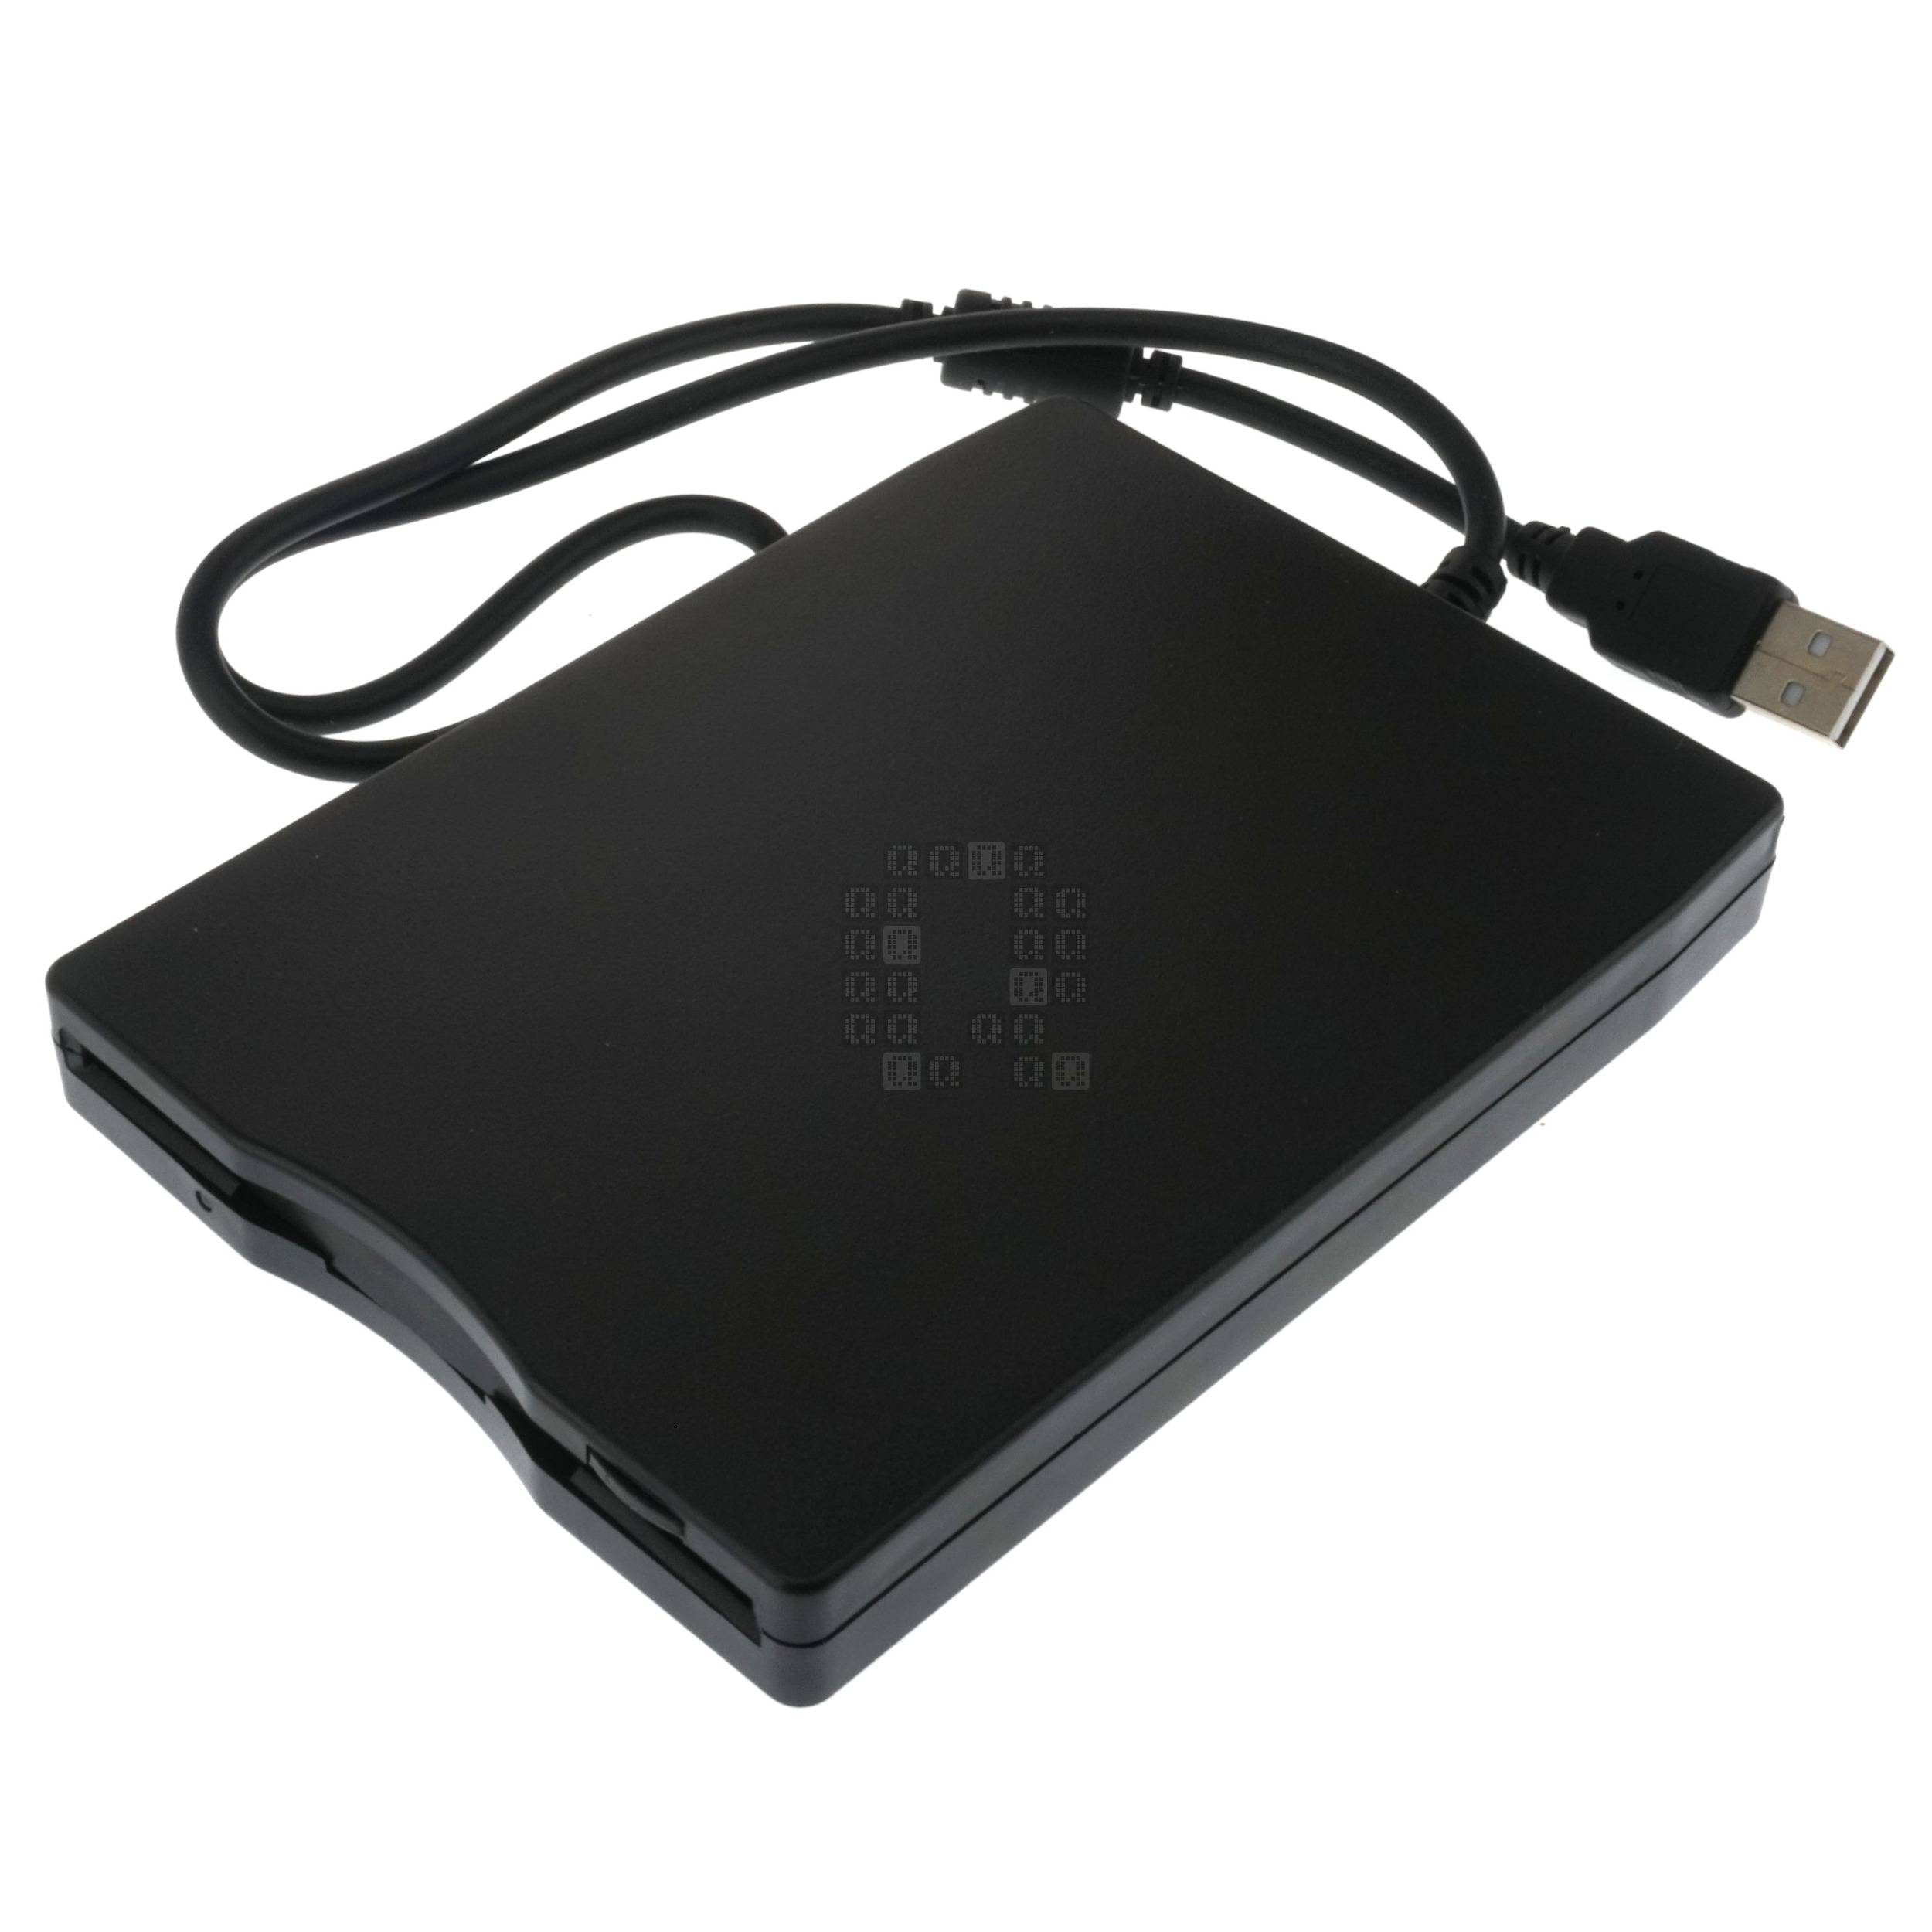 USB 2.0 External 3.5" Floppy Disk Drive, 720KB/1.44MB, MAC / Windows 10/8/7/XP